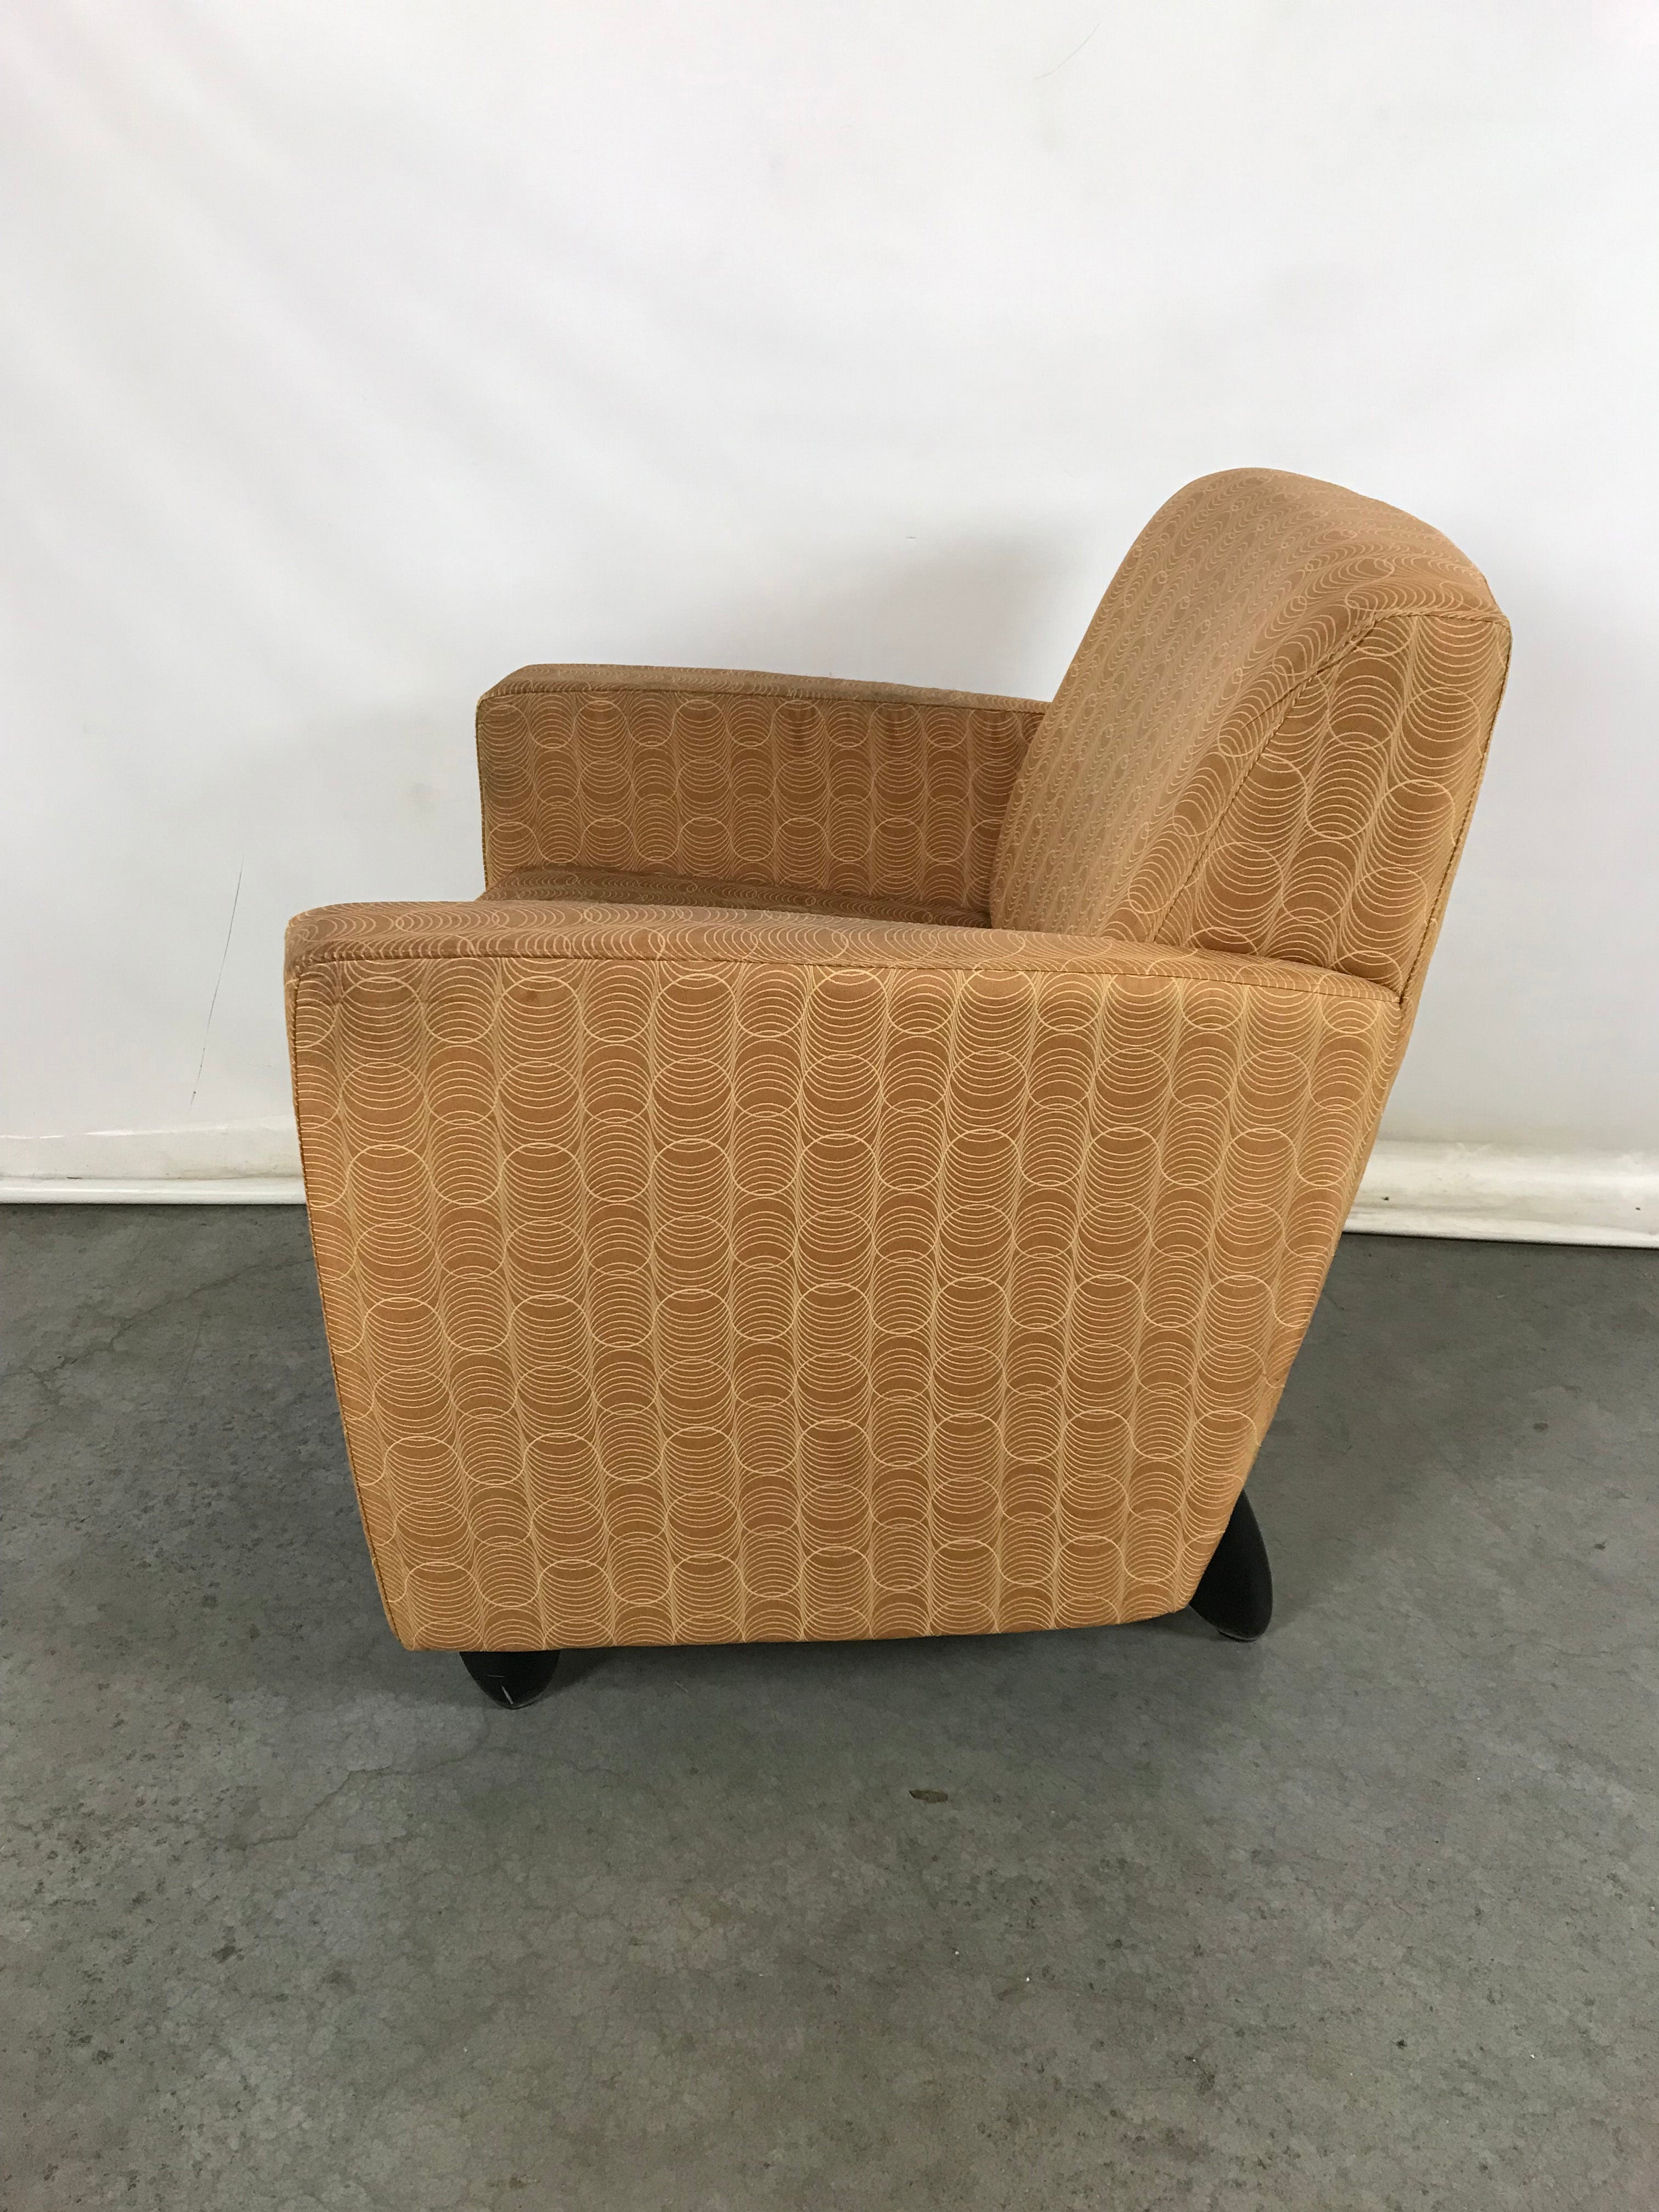 Haworth Orange Patterned Arm Chair